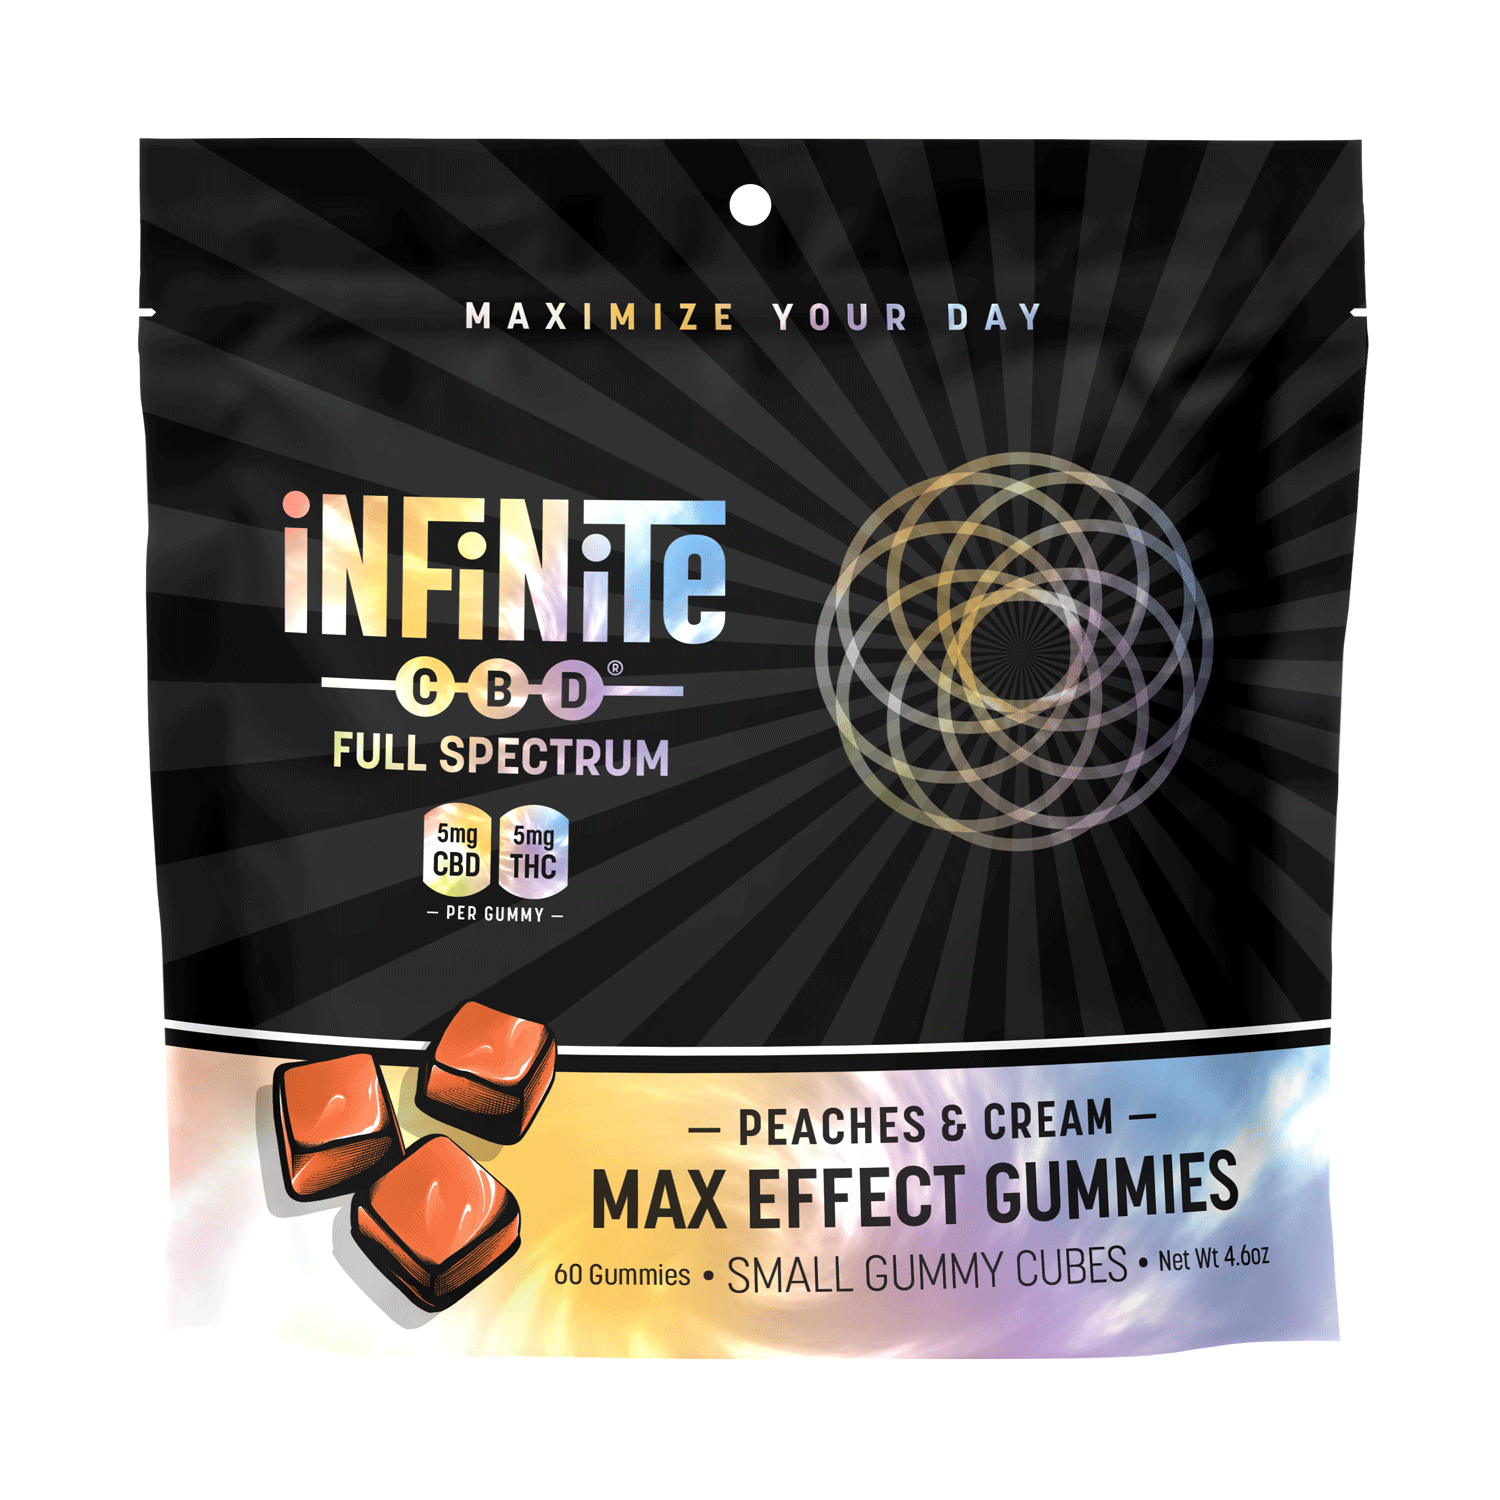 Gummies<br>Formulation: Max Effect<br>CBD: Full Spectrum (Contains THC)<br>Strength: Regular (5mg/serving)